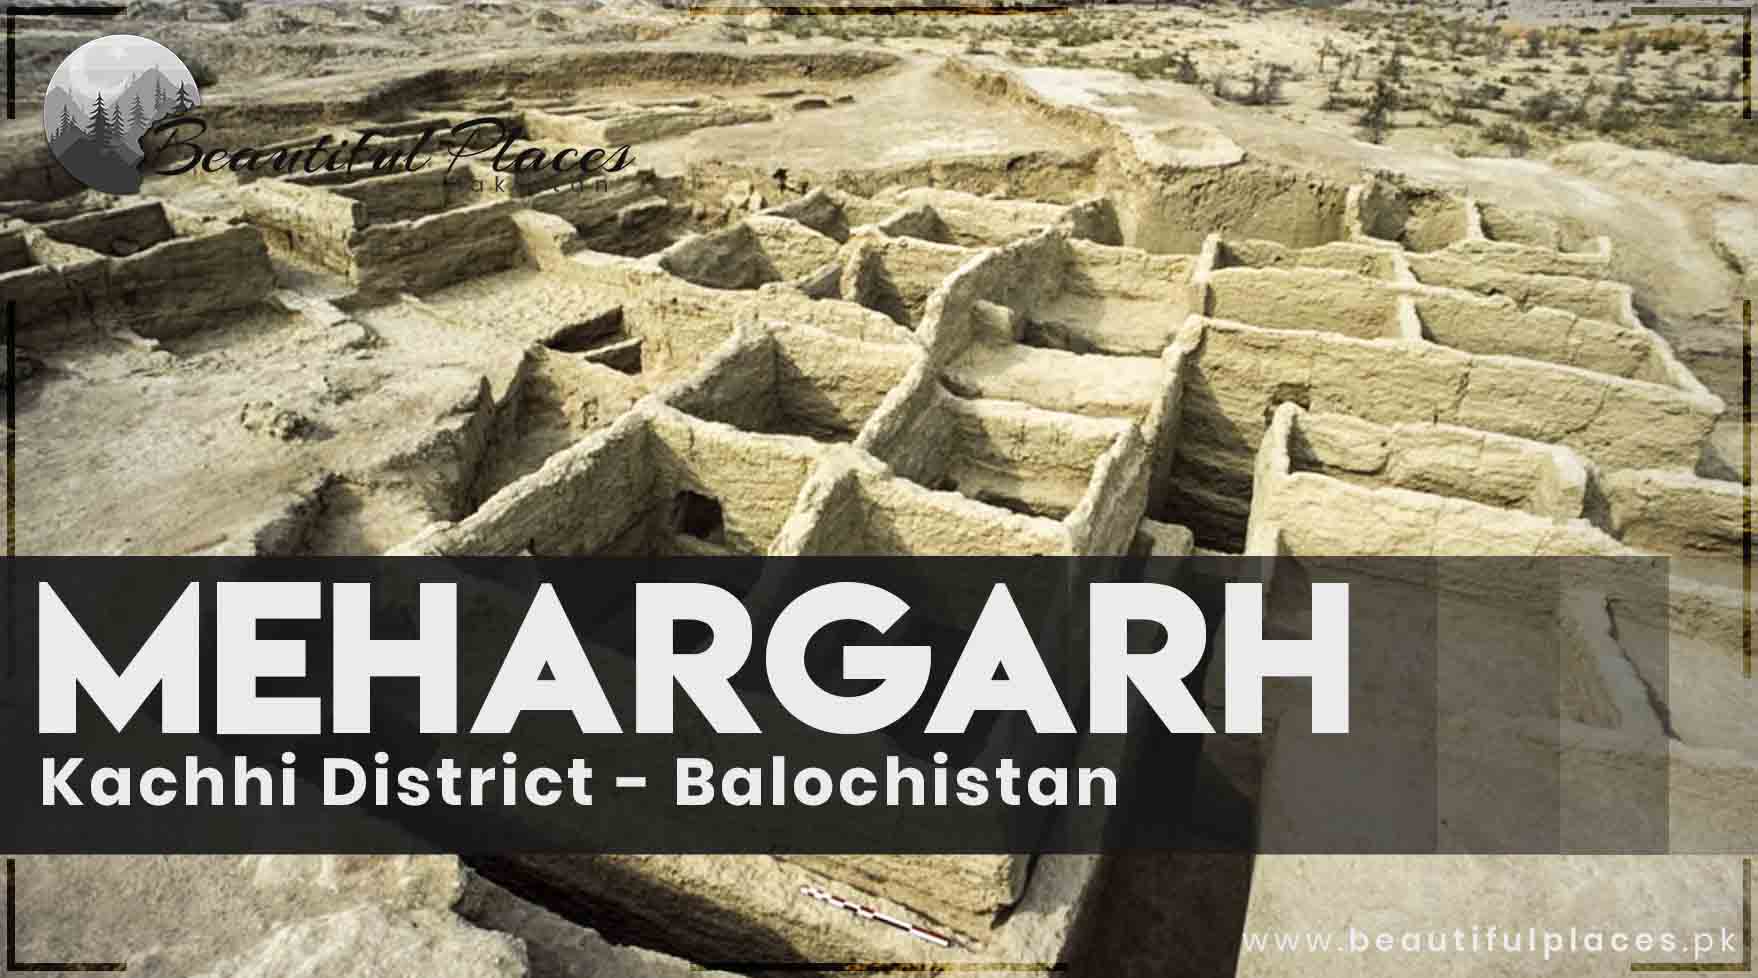 Kachhi District - Balochistan | Mehargarh Civilization